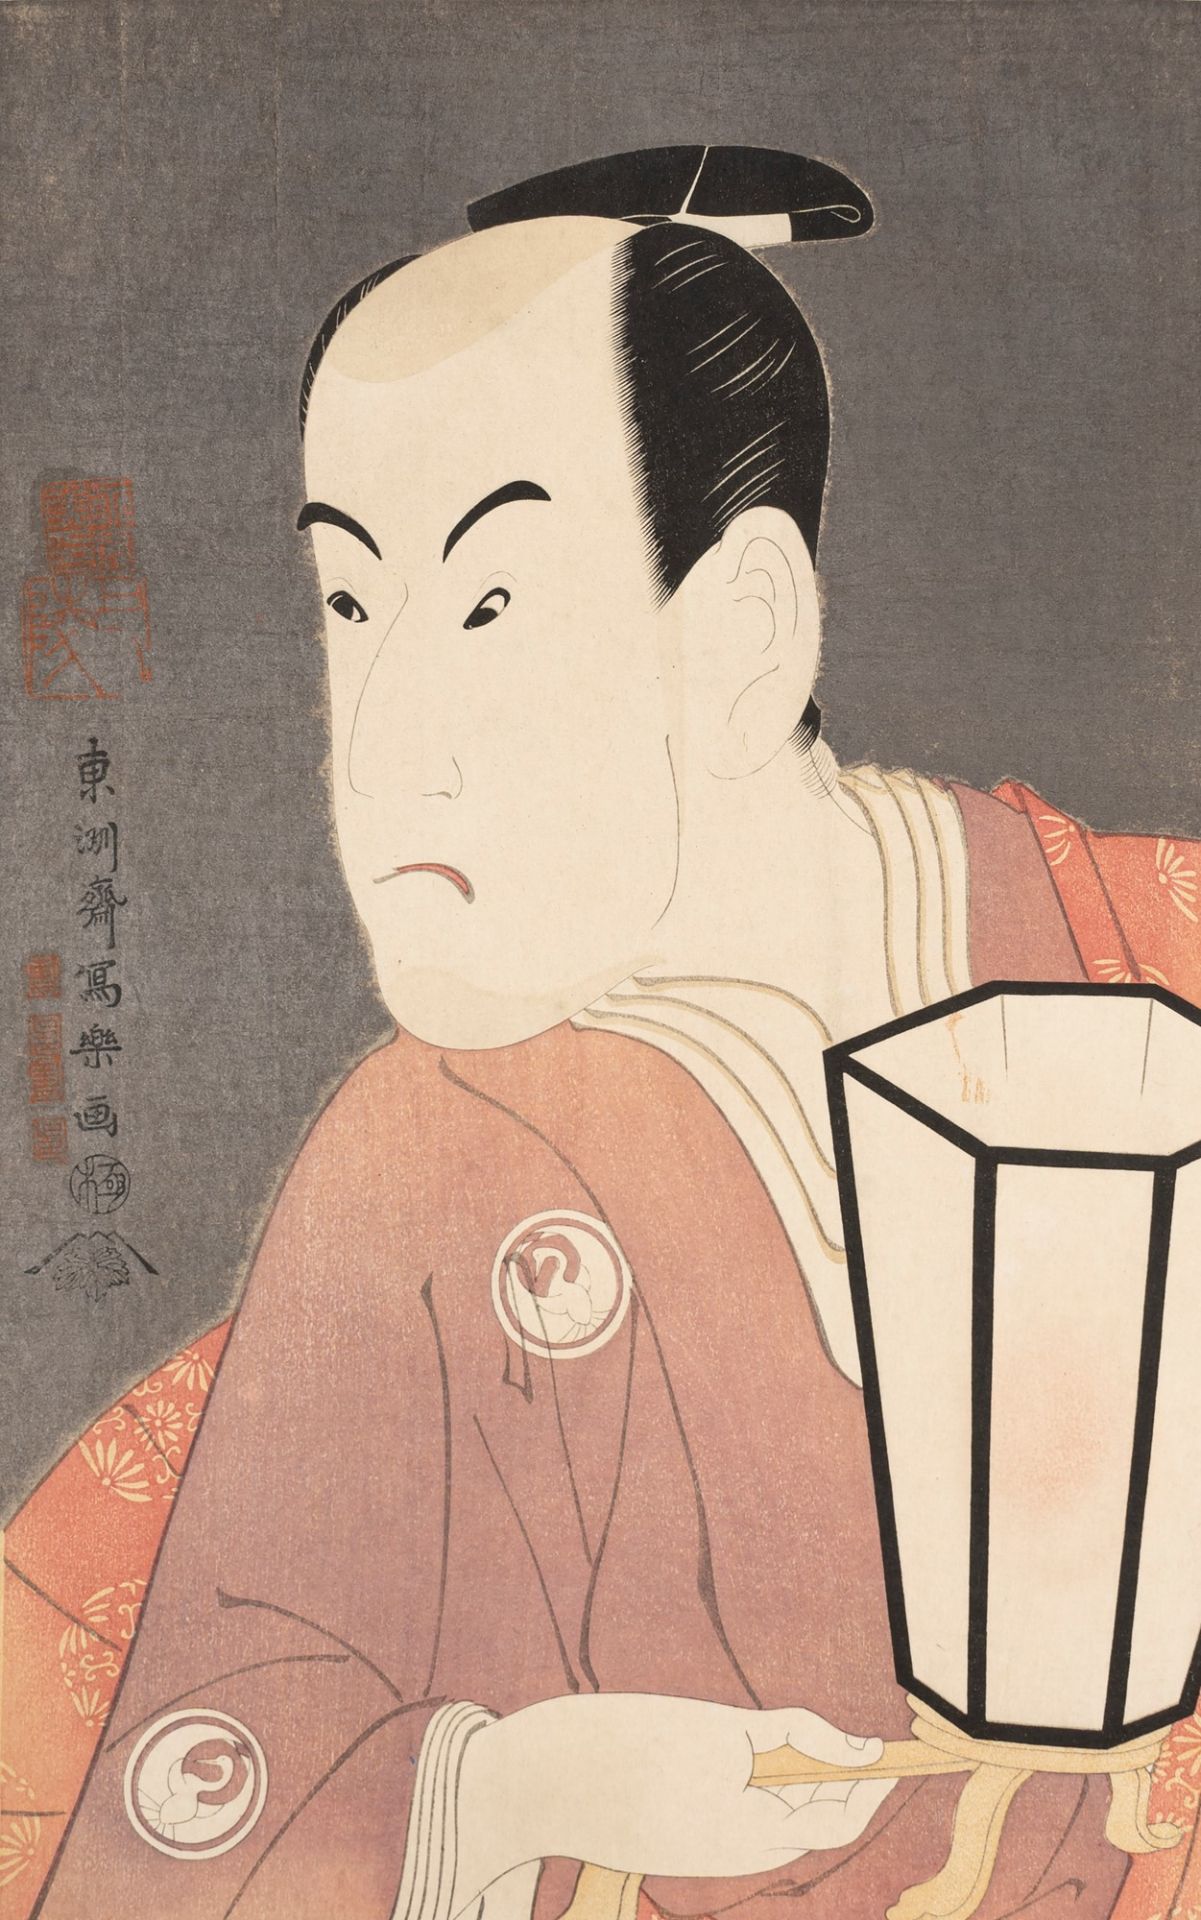 Sharaku - Five woodcuts representing theatrical masks, Japan, Taisho period - Image 4 of 5